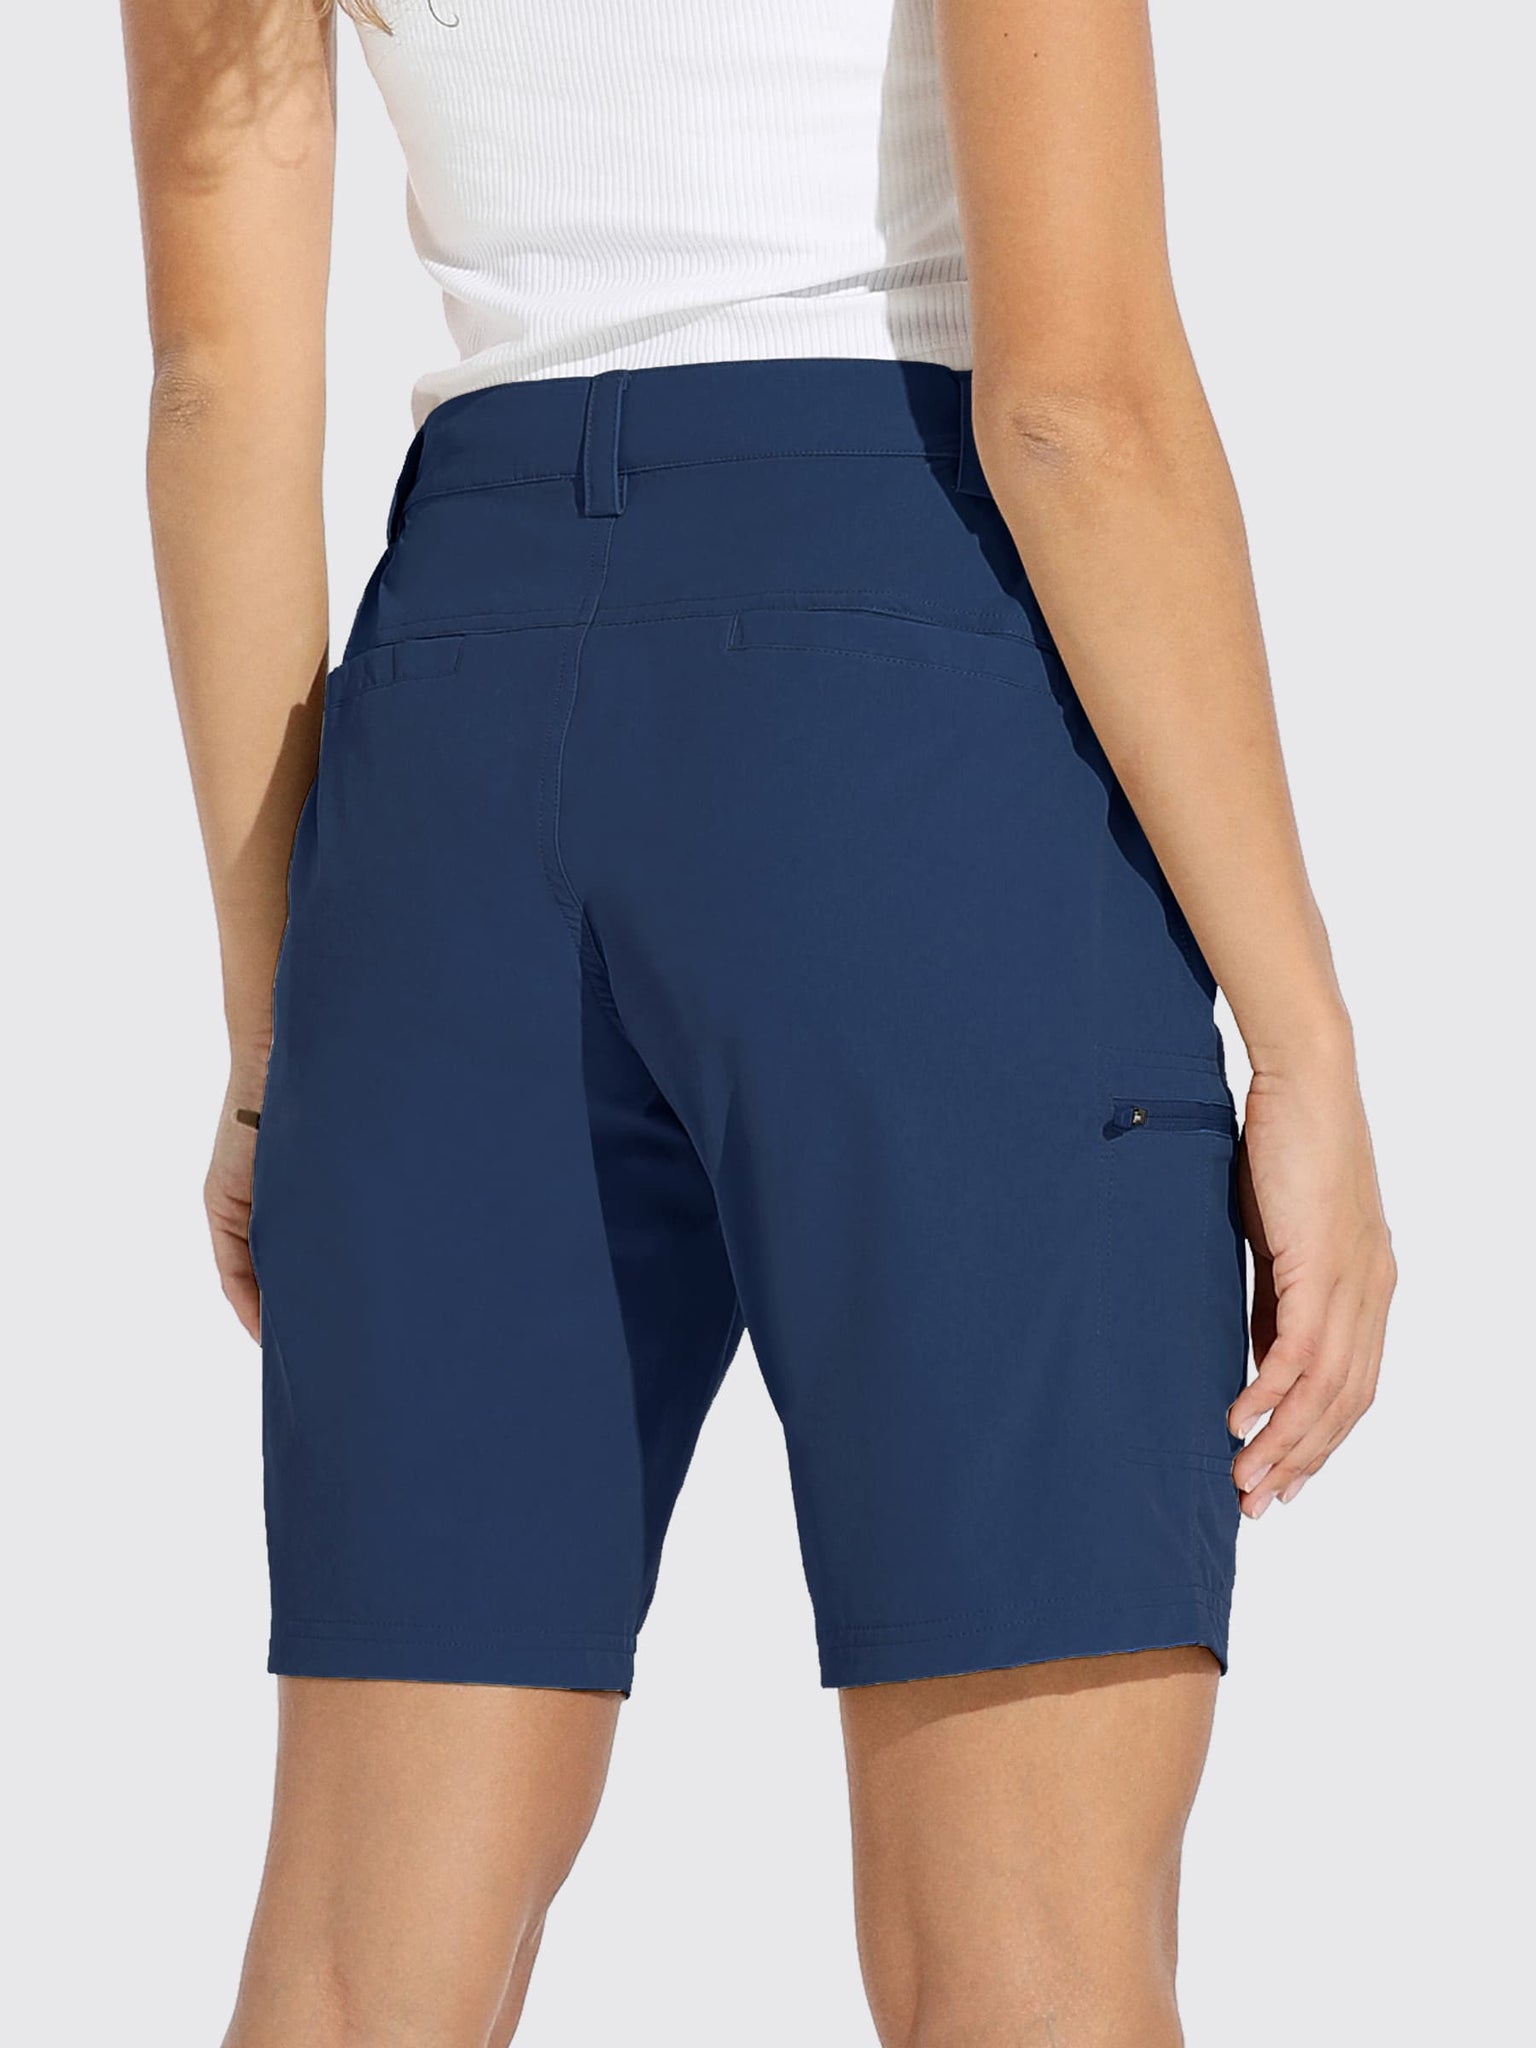 Women's Outdoor Cargo Shorts 10 Inseam_Navy2